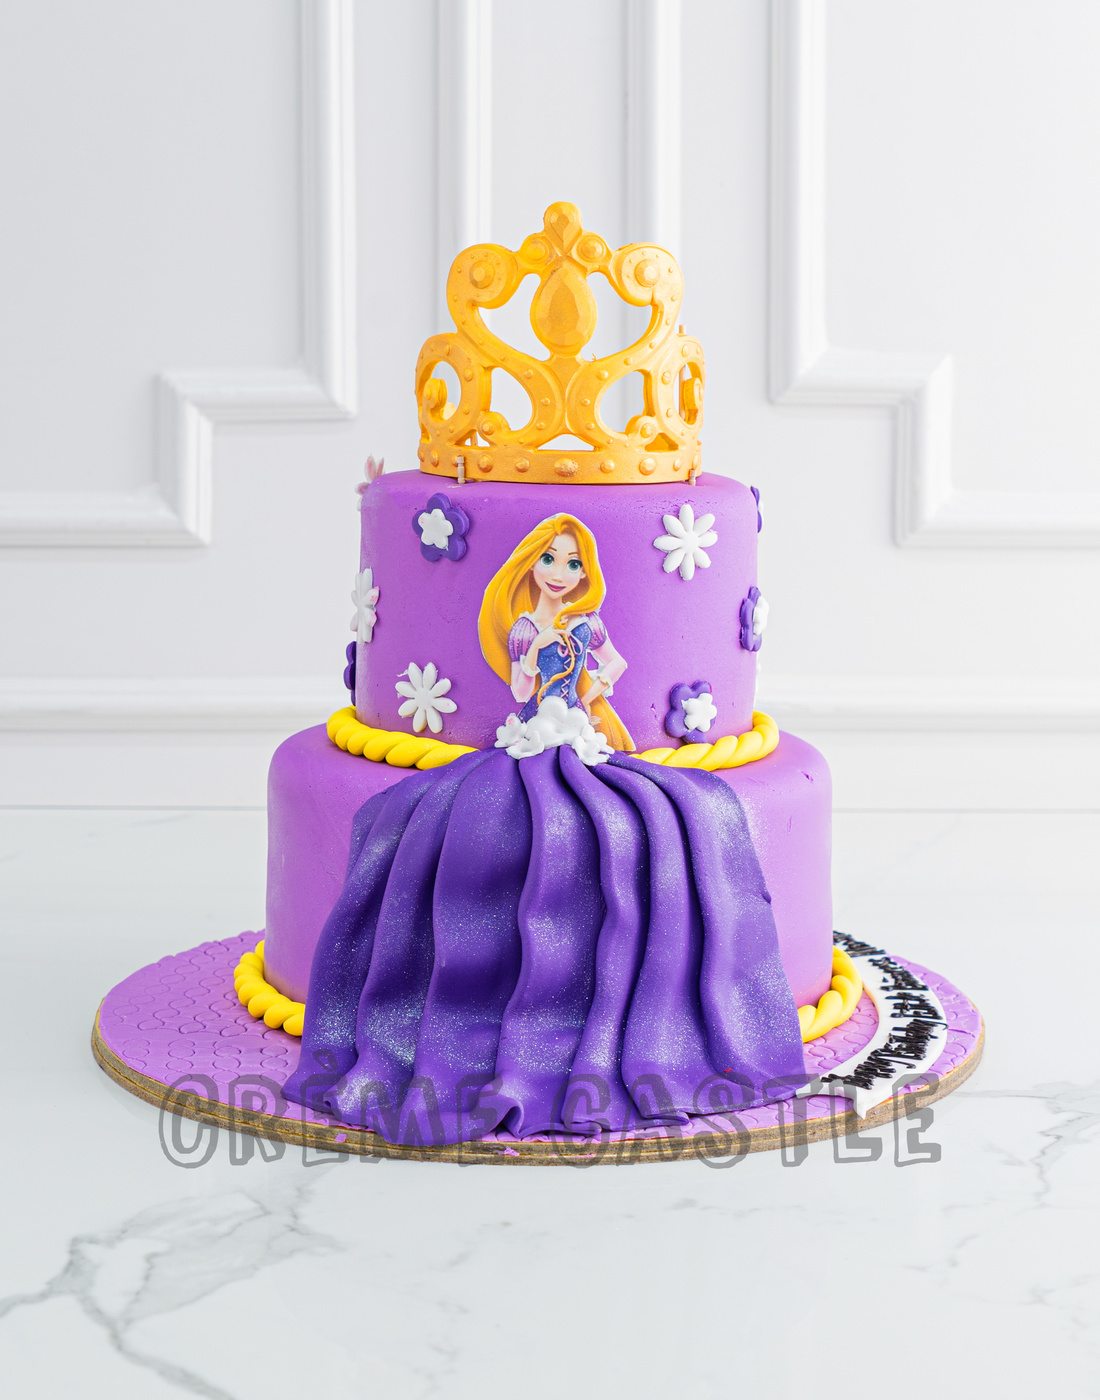 Rapunzel cake - ZANNALAND!